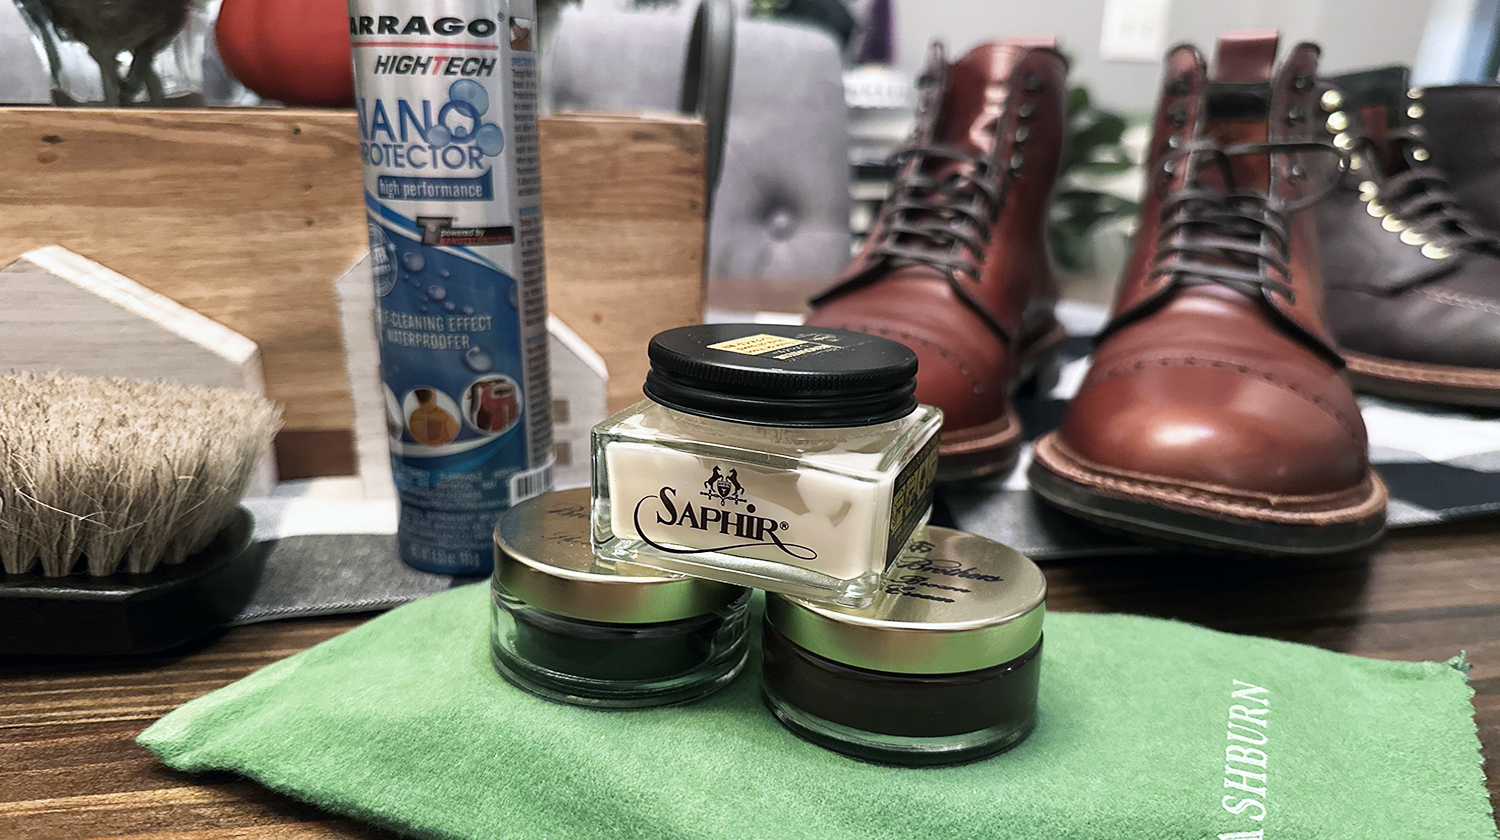 Saphir shoe polish, Shine and protect leather shoes